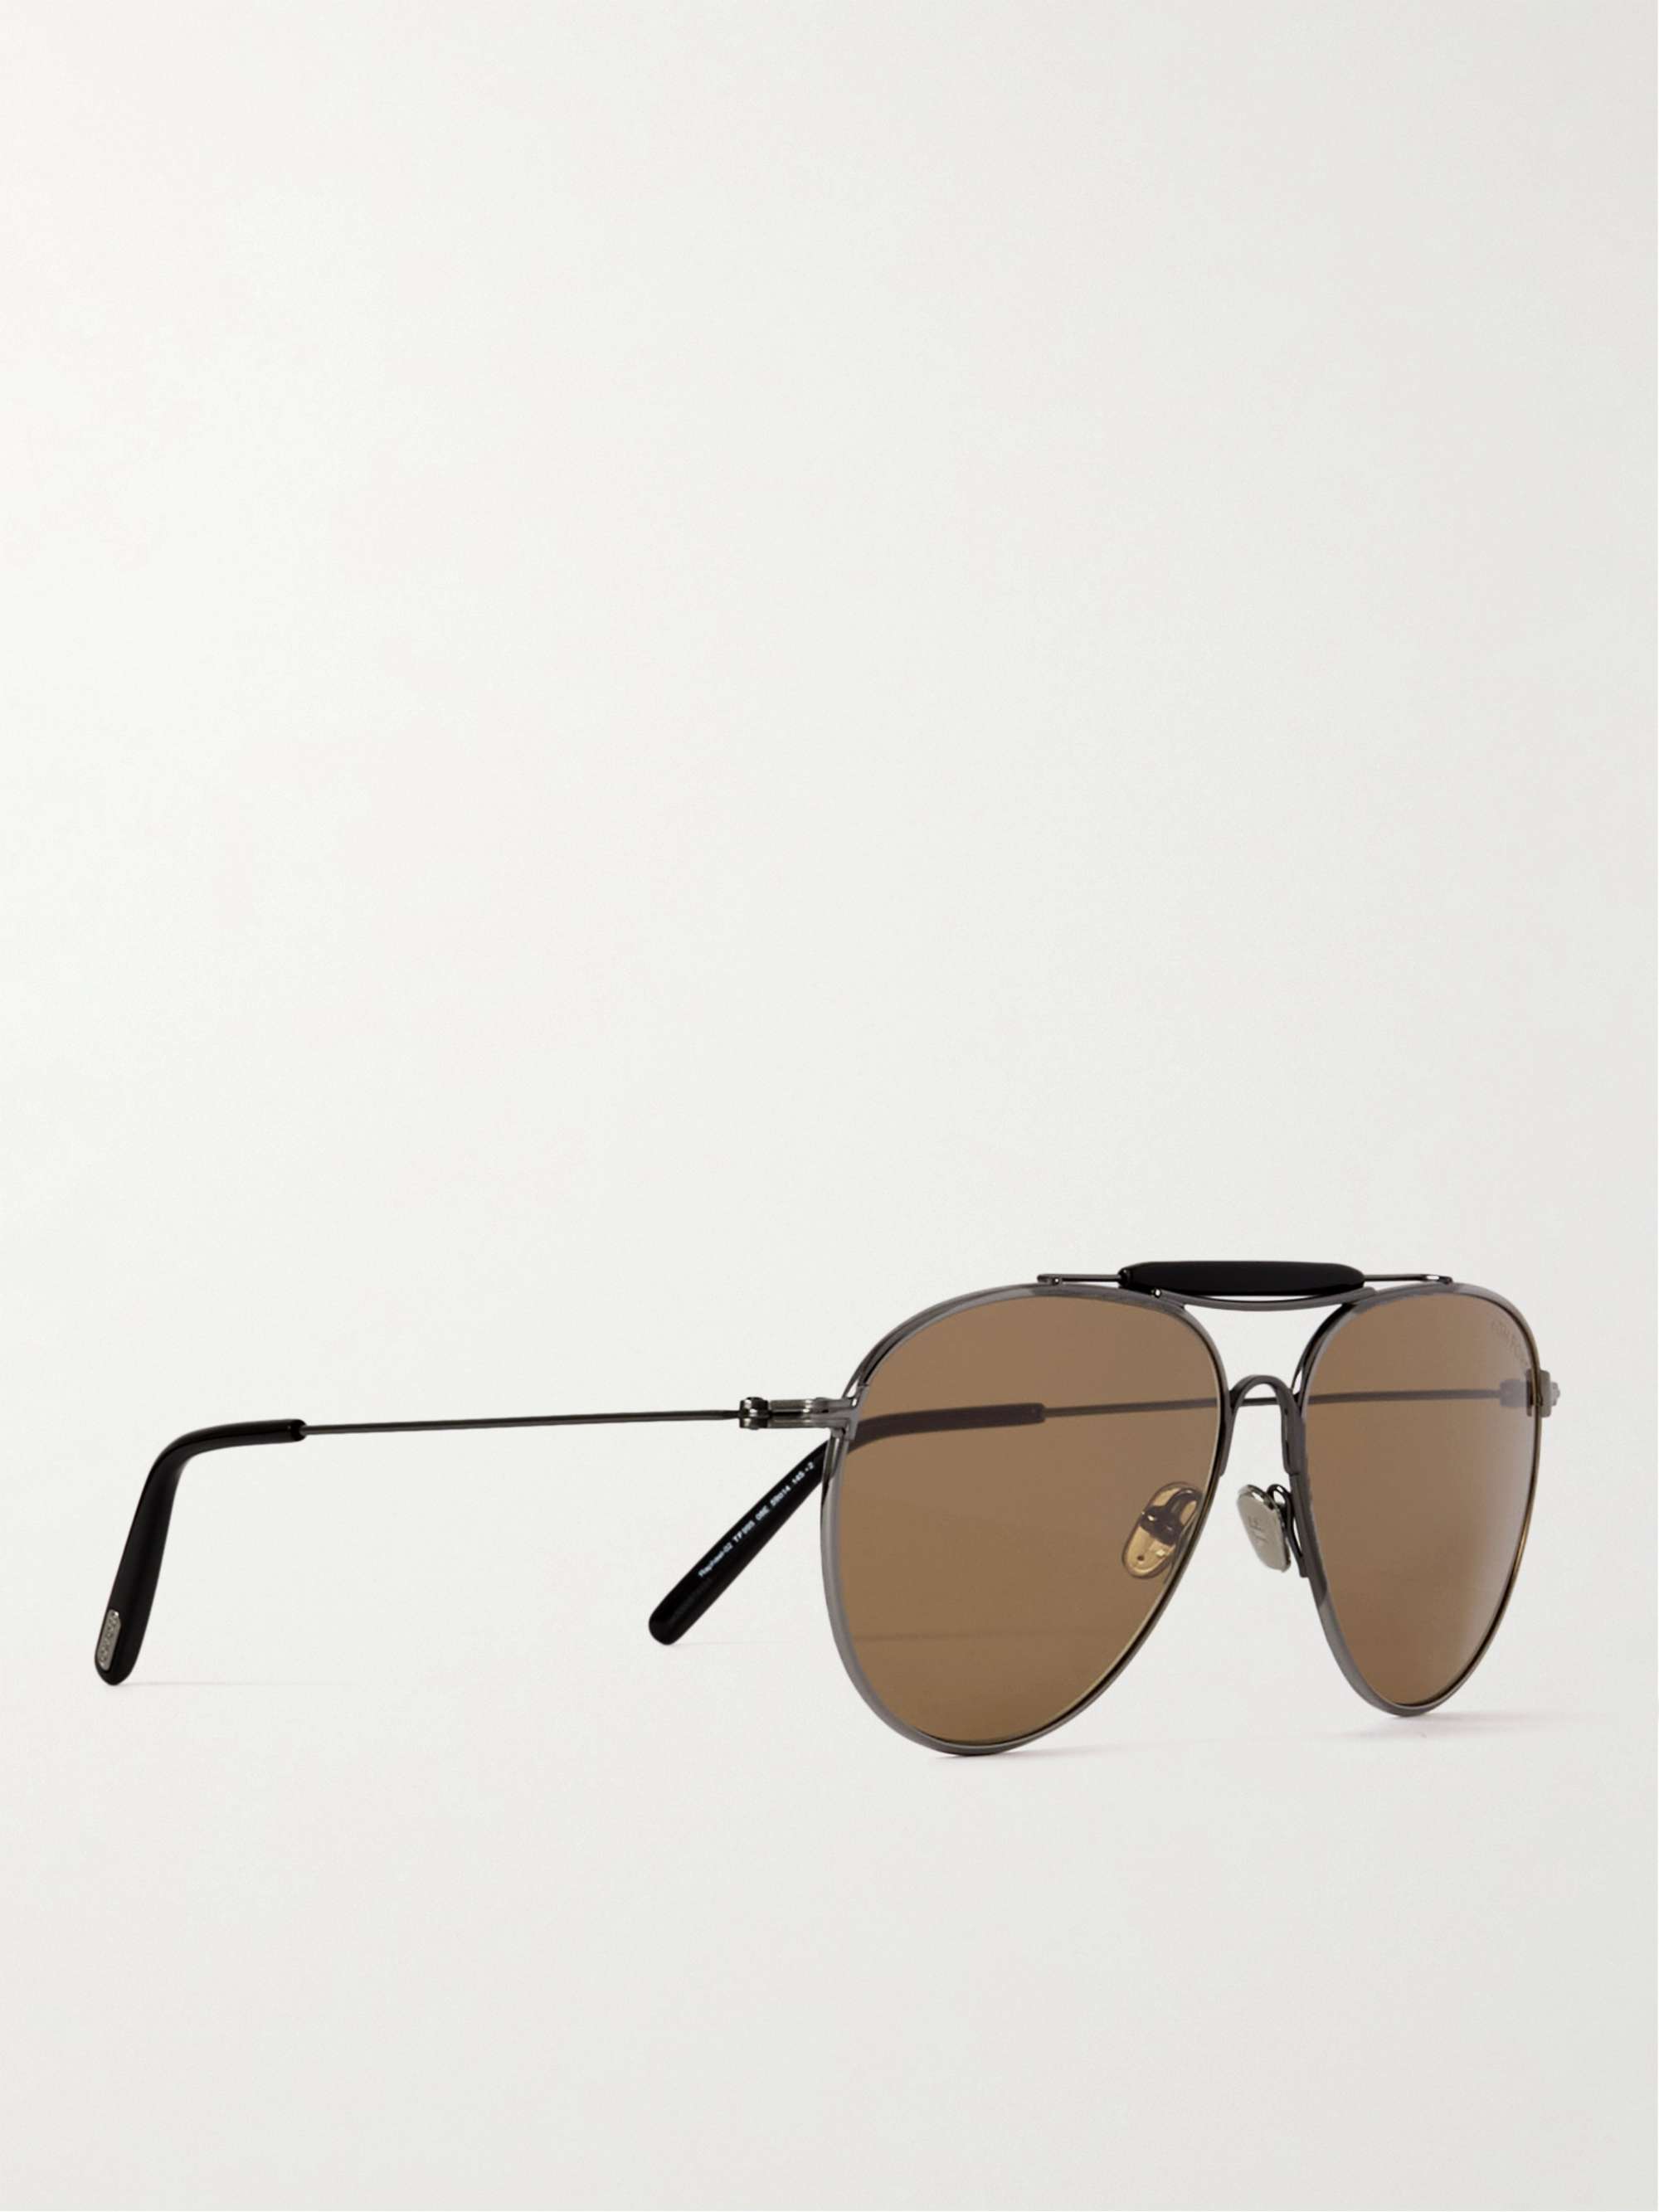 TOM FORD EYEWEAR Aviator-Style Silver-Tone and Tortoiseshell Acetate Sunglasses